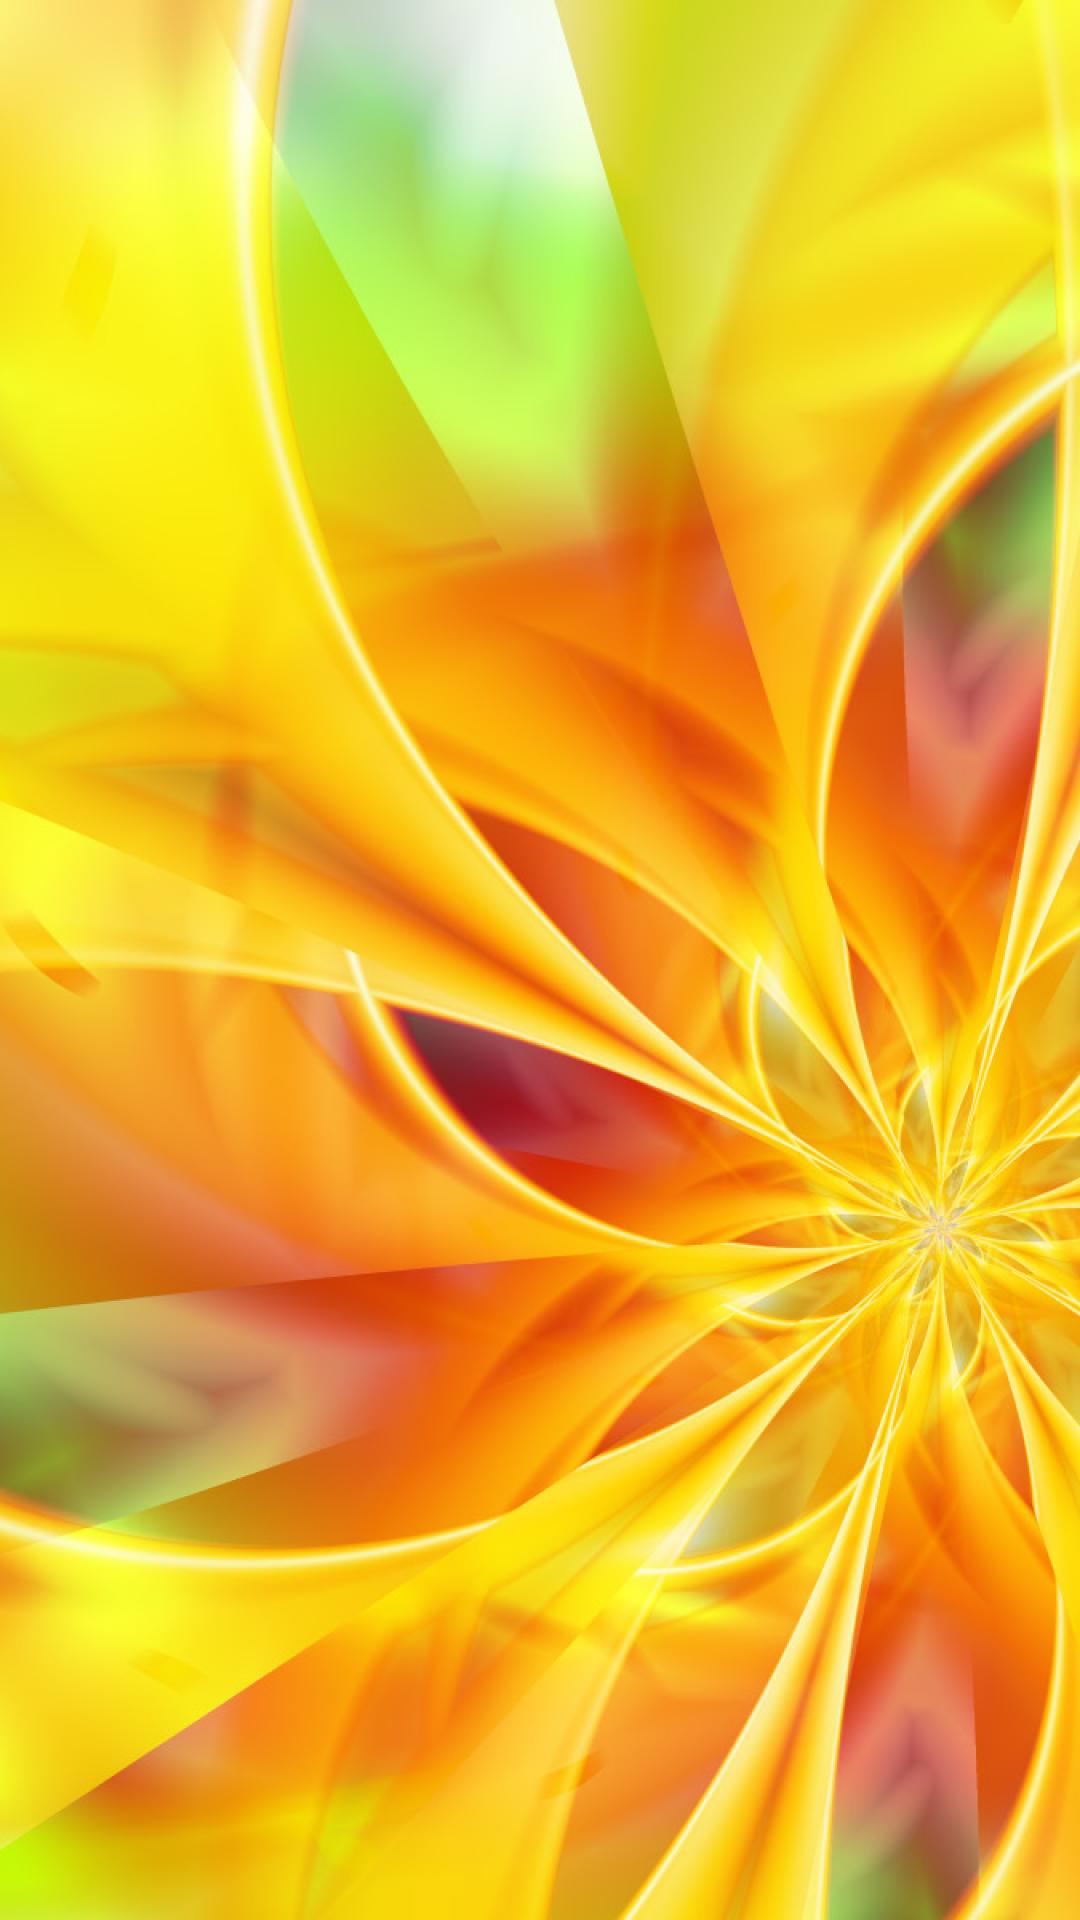 Abstract Cool Yellow Flower HD Wallpaper Vector